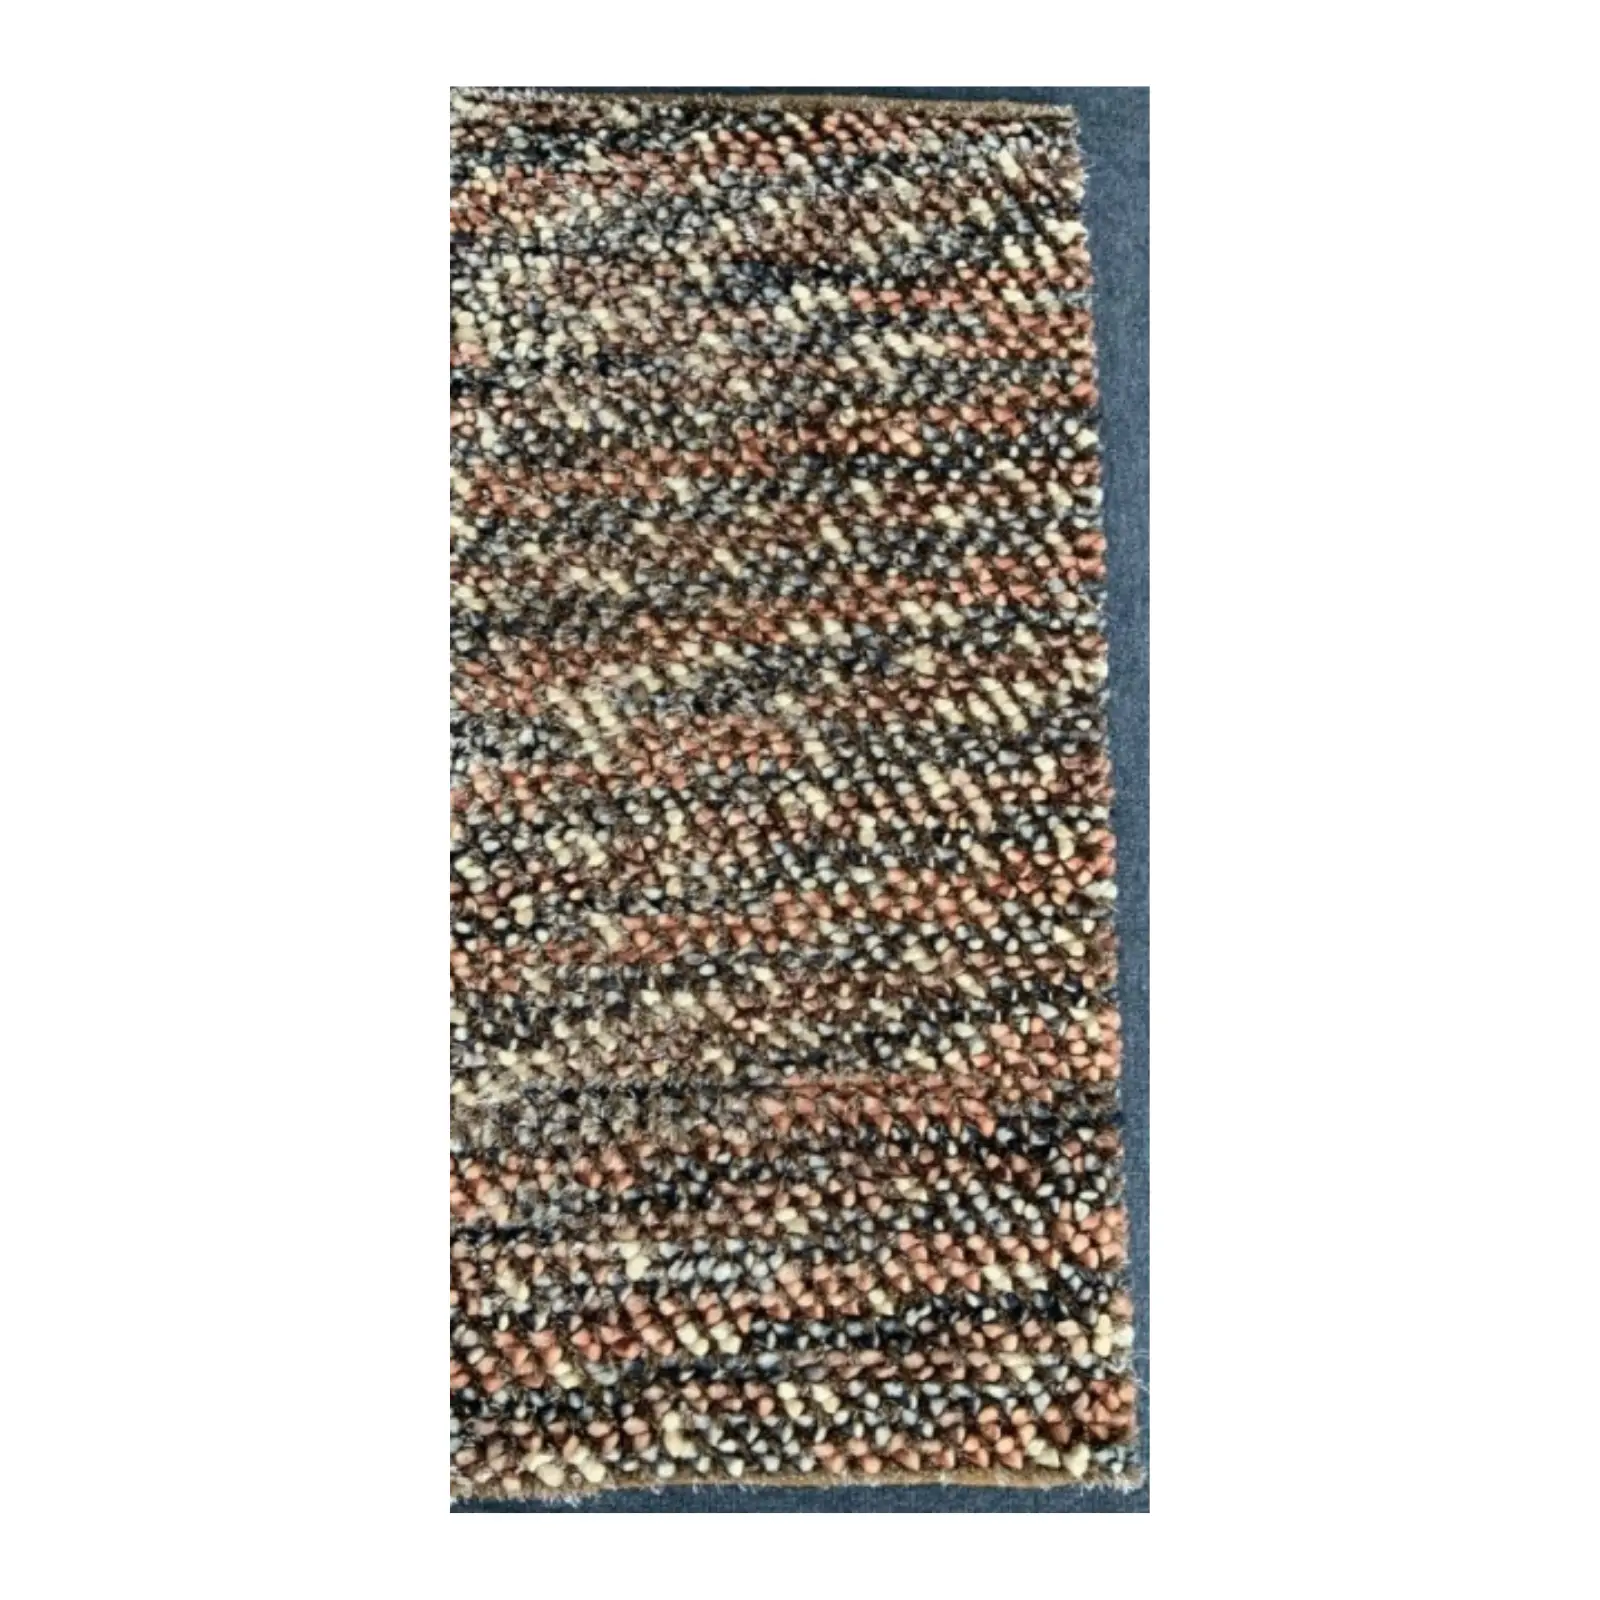 Teppich, gemustert, 70x140cm